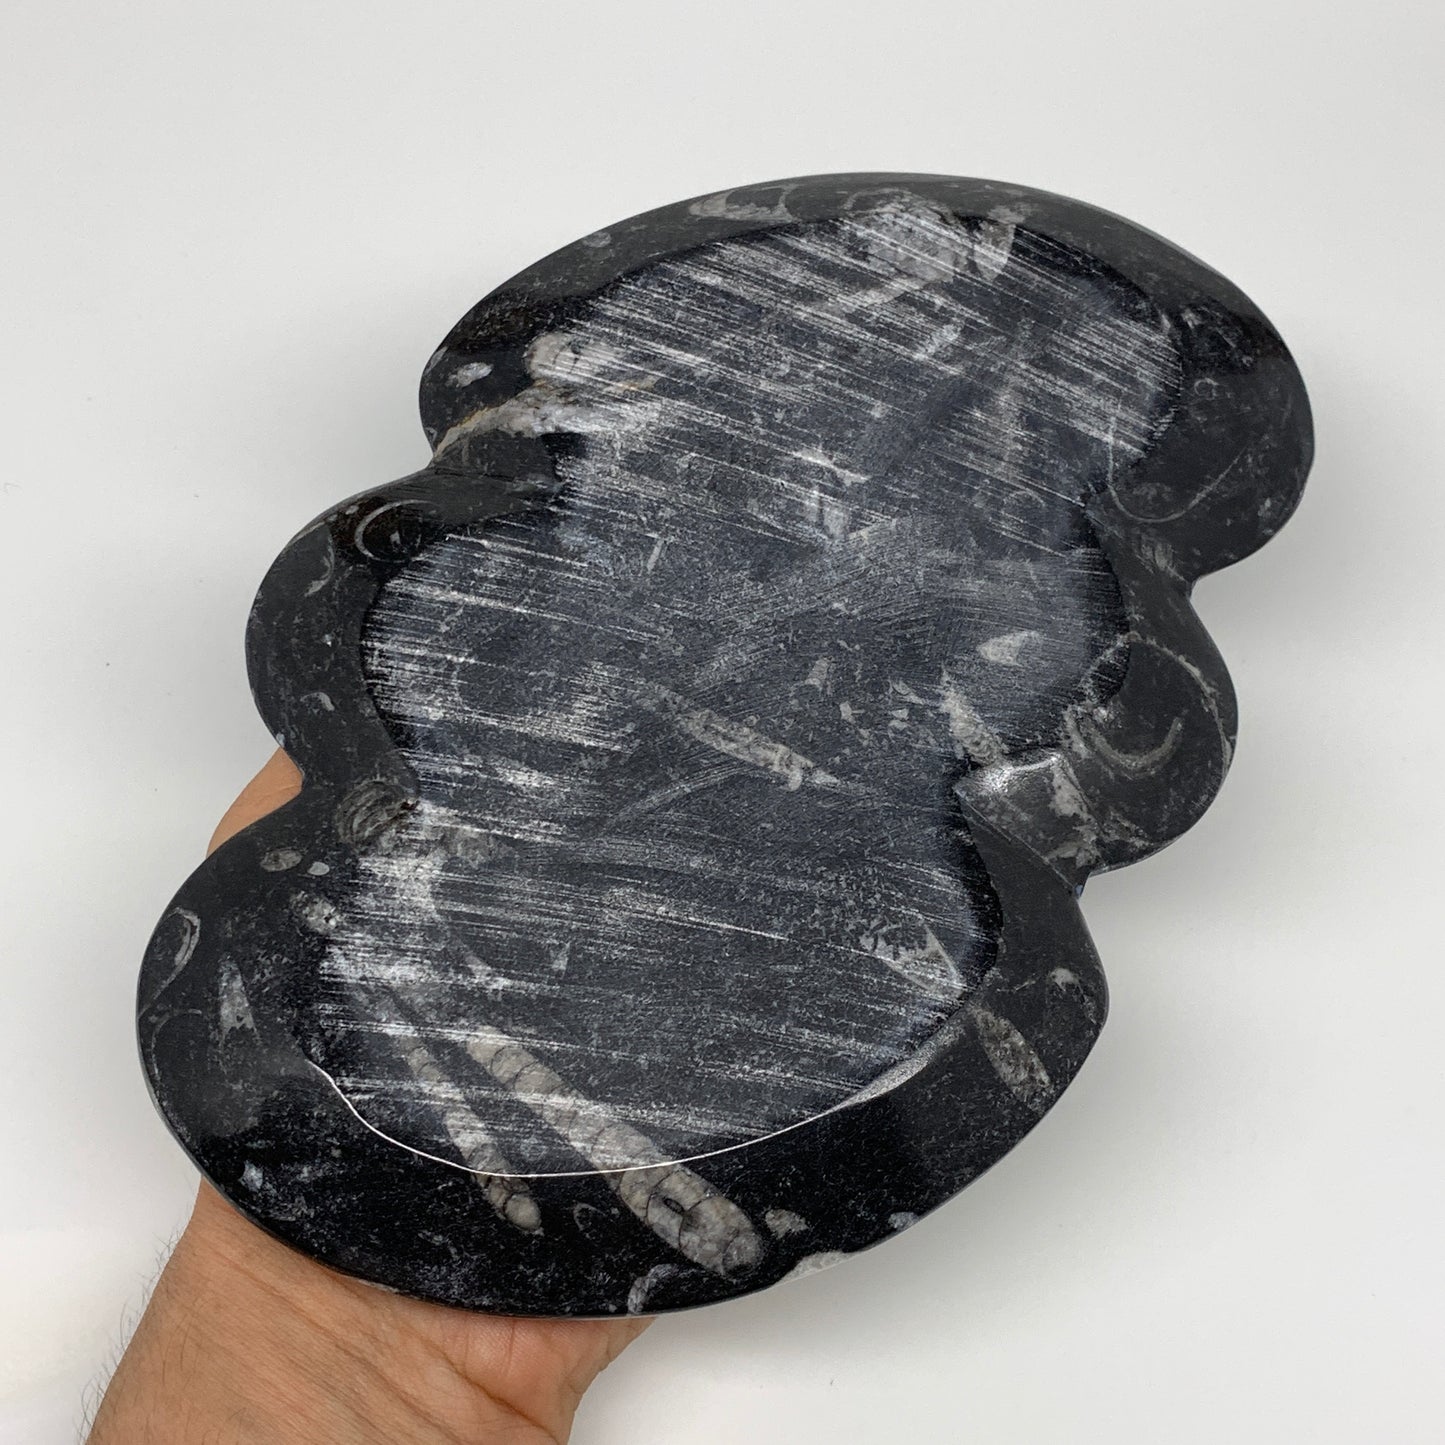 2pcs Set,8.5"x5.5" Double Heart Fossils Orthoceras Ammonite Bowls @Morocco,B8499